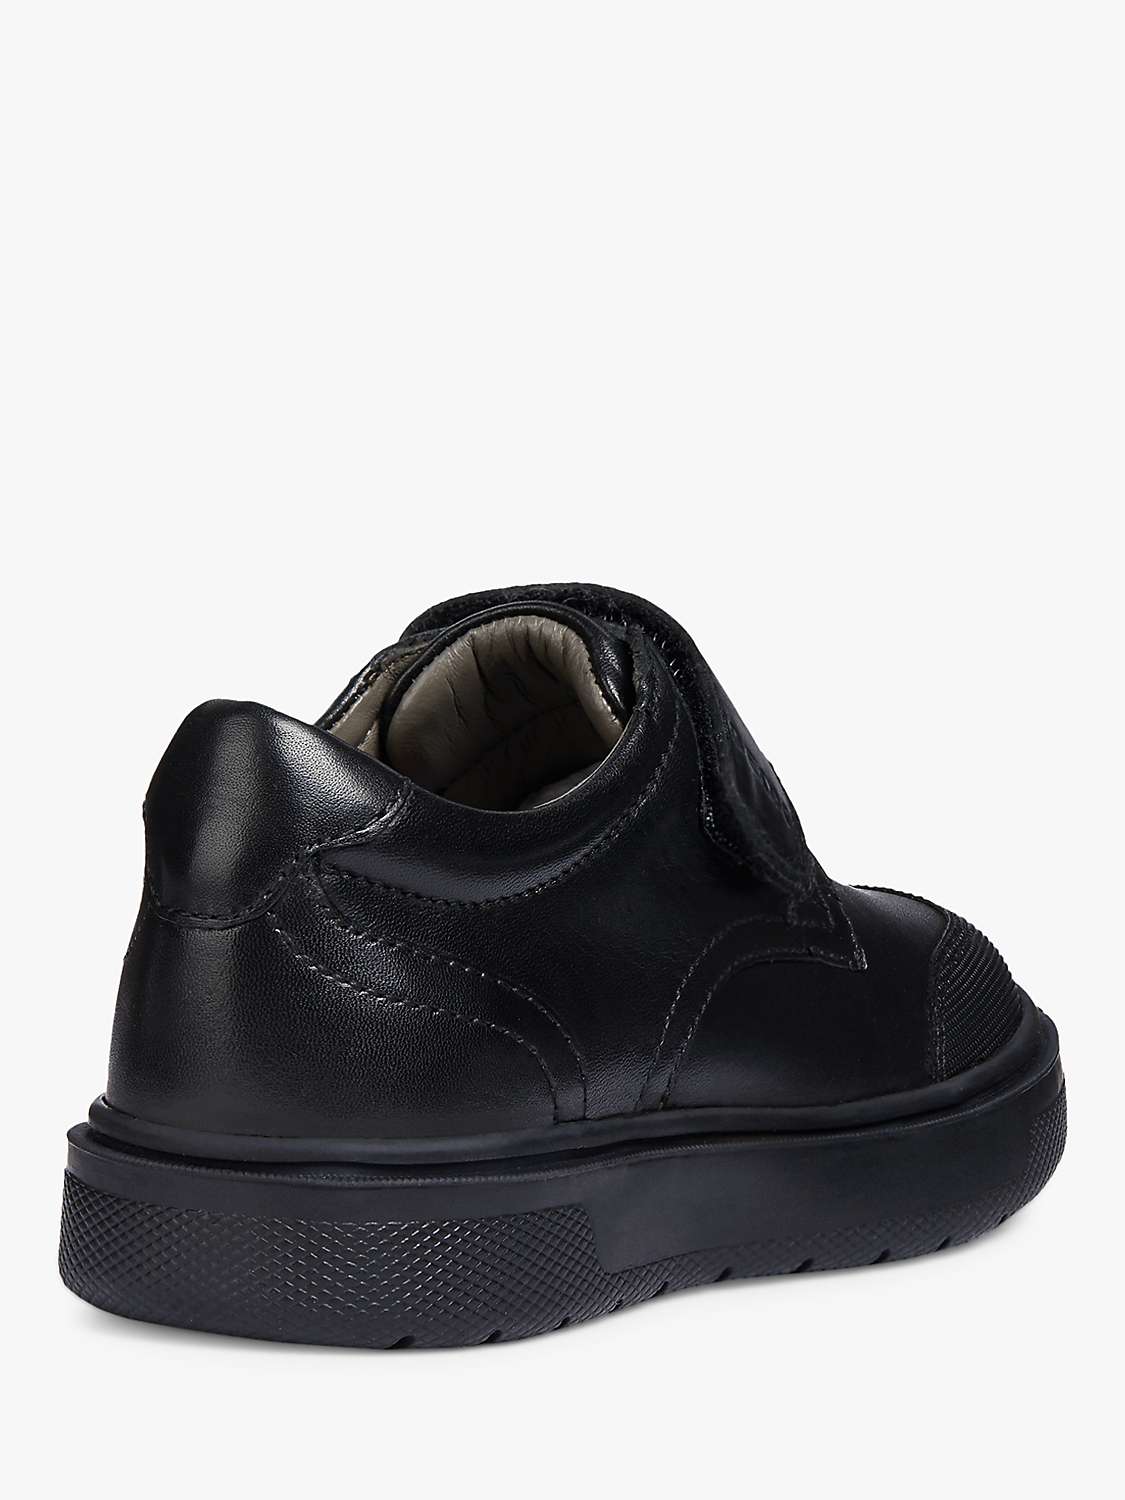 Buy Geox Kids' Riddock Riptape School Shoes, Black Online at johnlewis.com